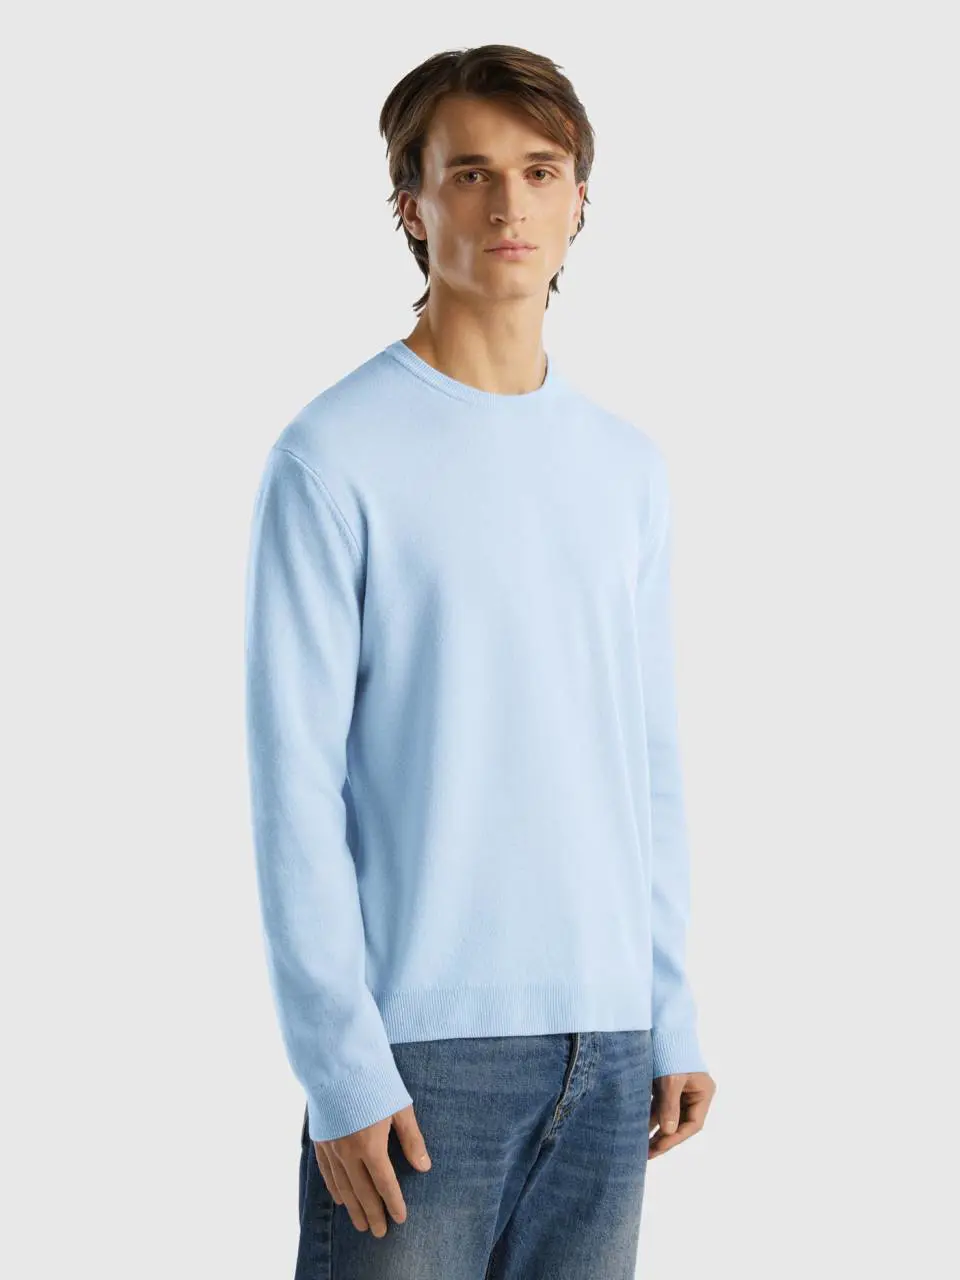 Benetton light blue crew neck sweater in pure merino wool. 1